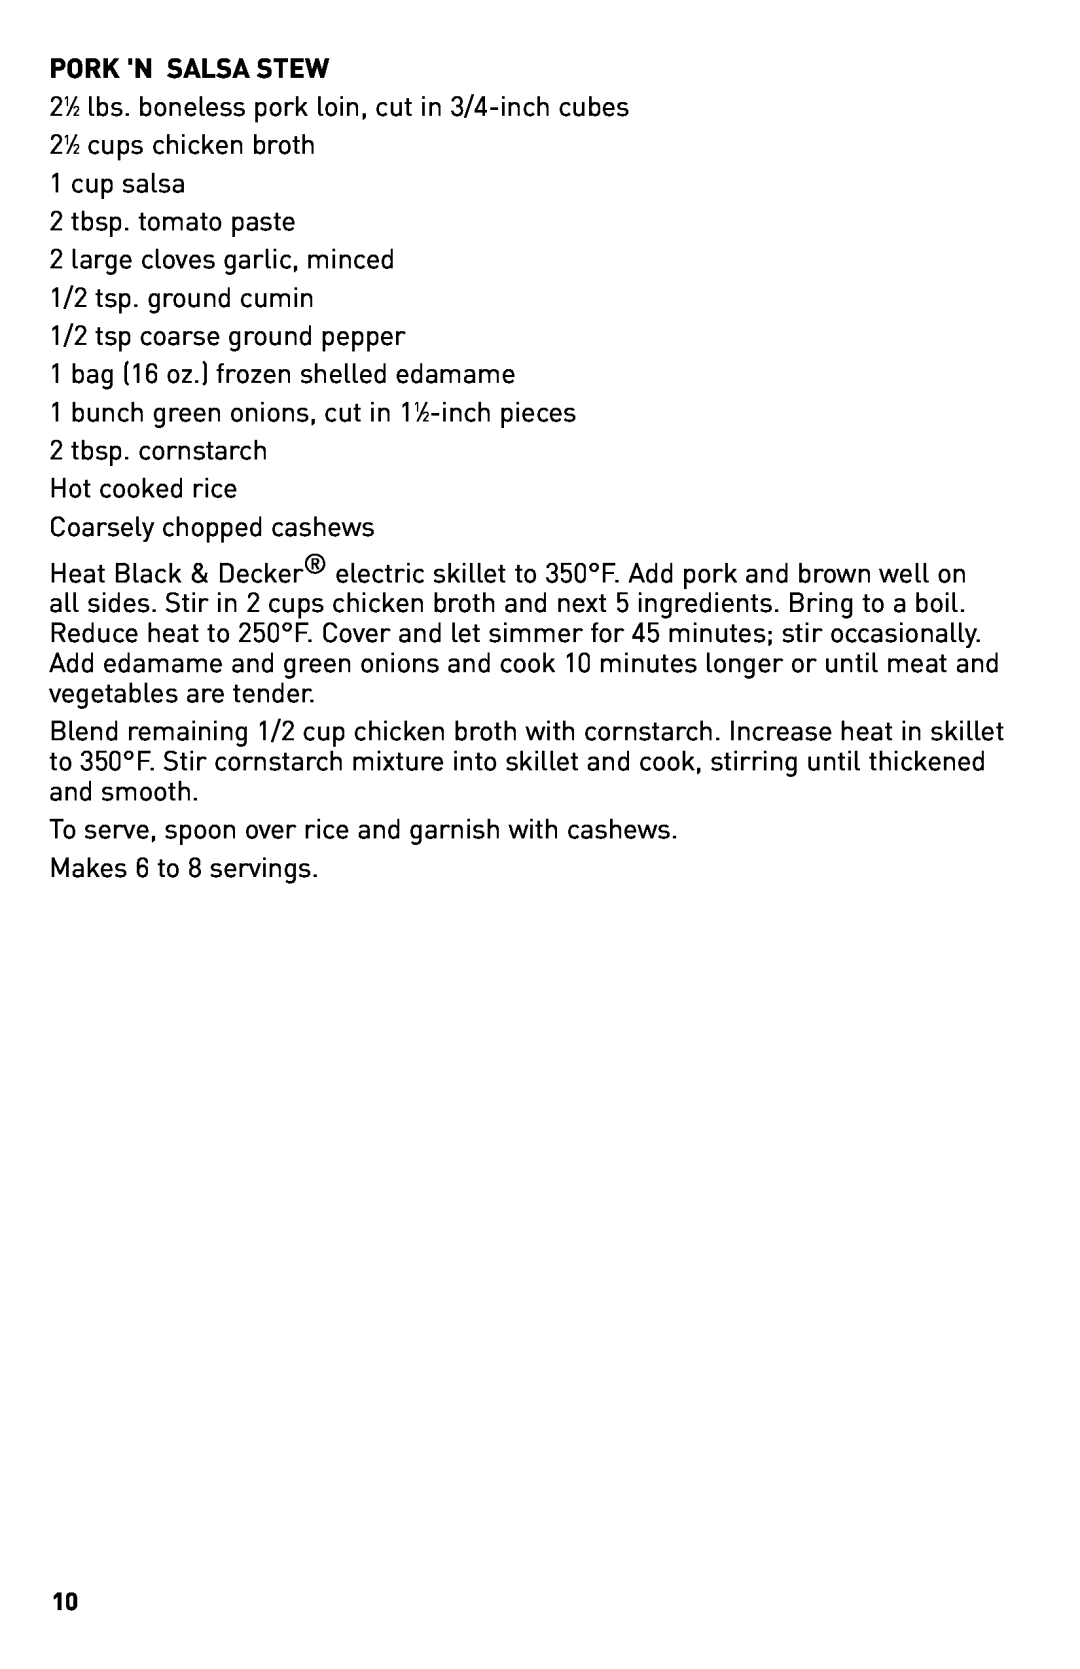 Black & Decker SKG110C manual Pork N Salsa Stew 